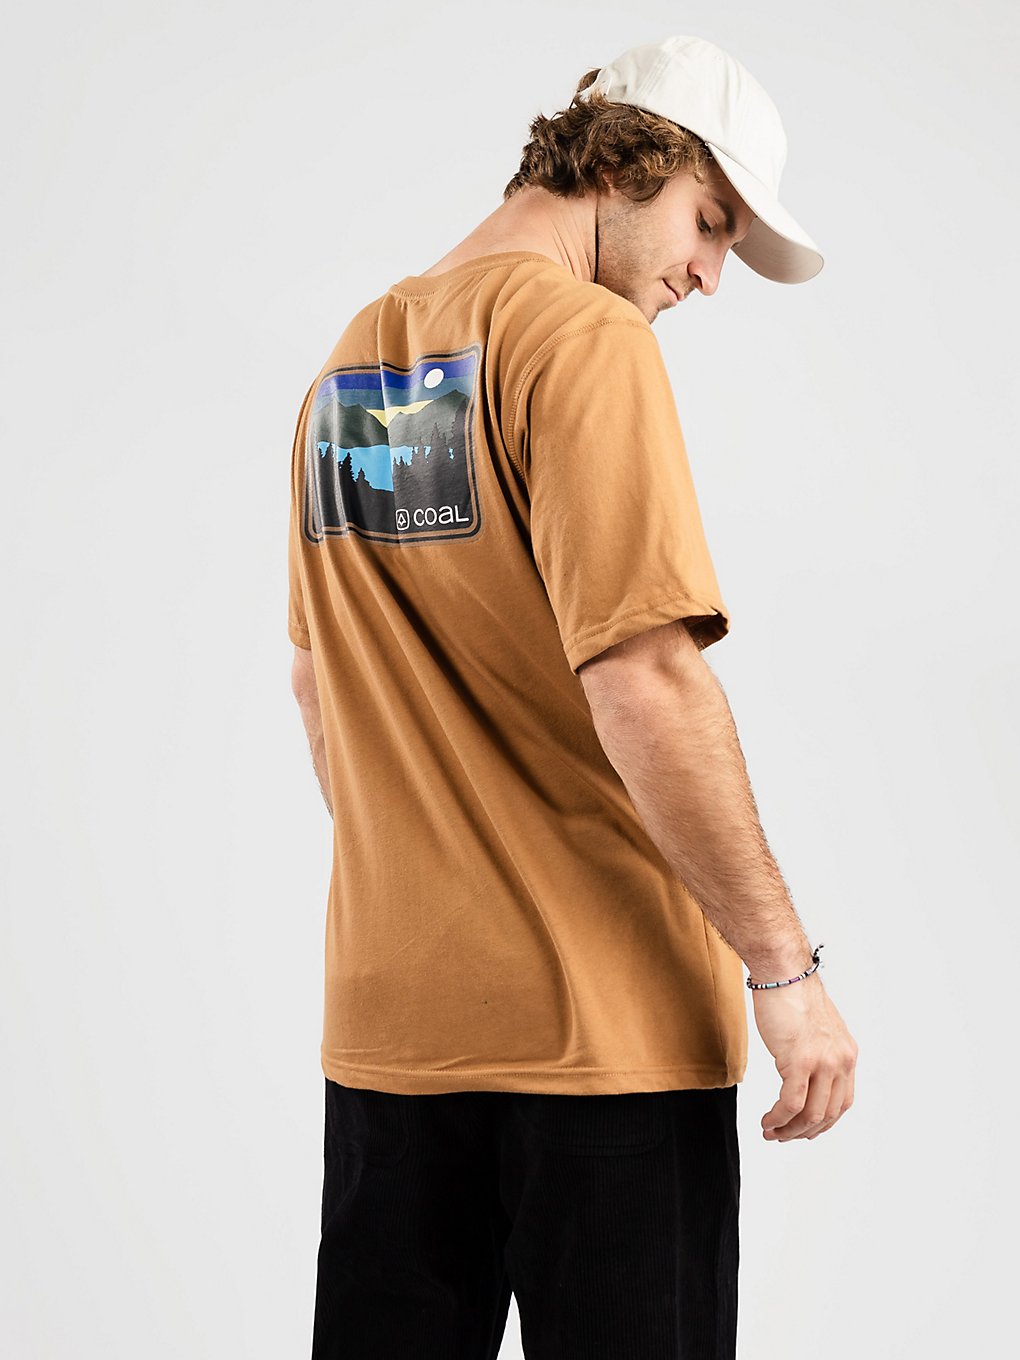 Coal Klamath T-Shirt light brown kaufen